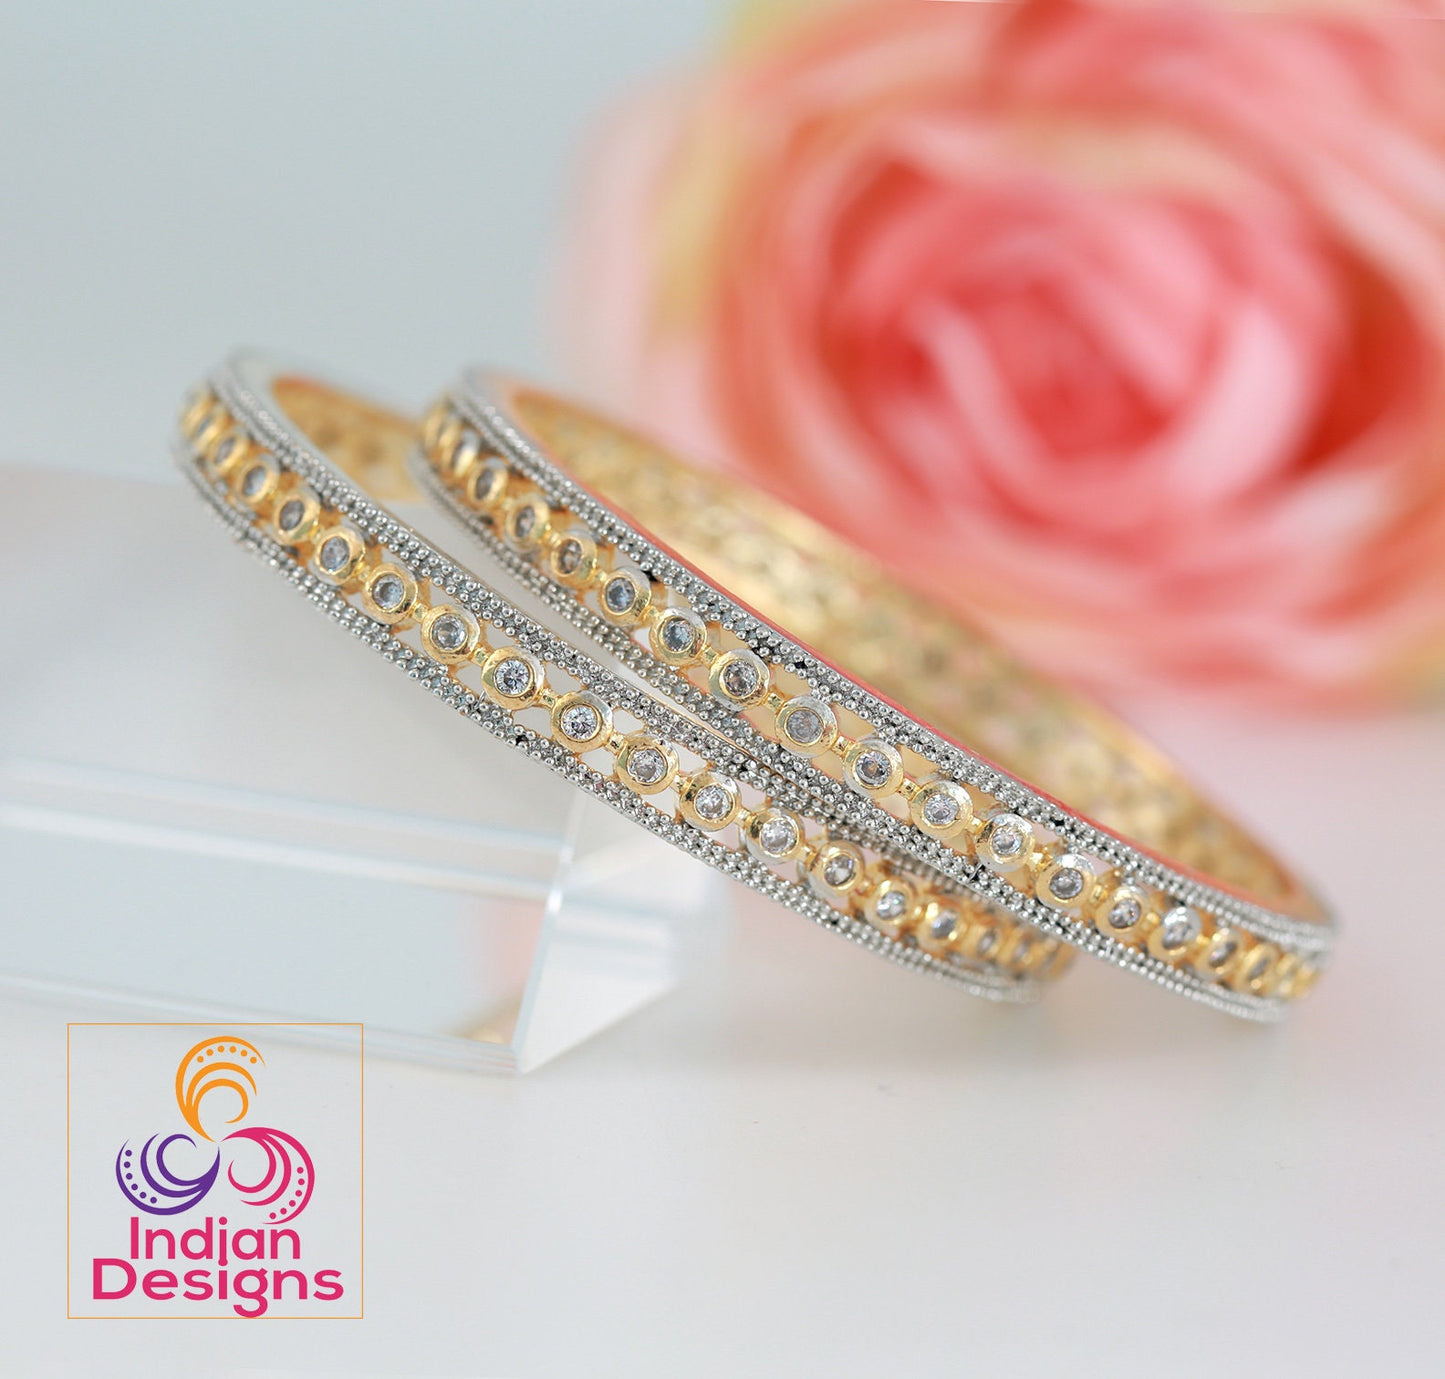 Pair American Diamond Two tone Gold bangles | Gold Cz bangles designs | 18K Gold plated white CZ wedding bridal bangles set | Indian jewelry